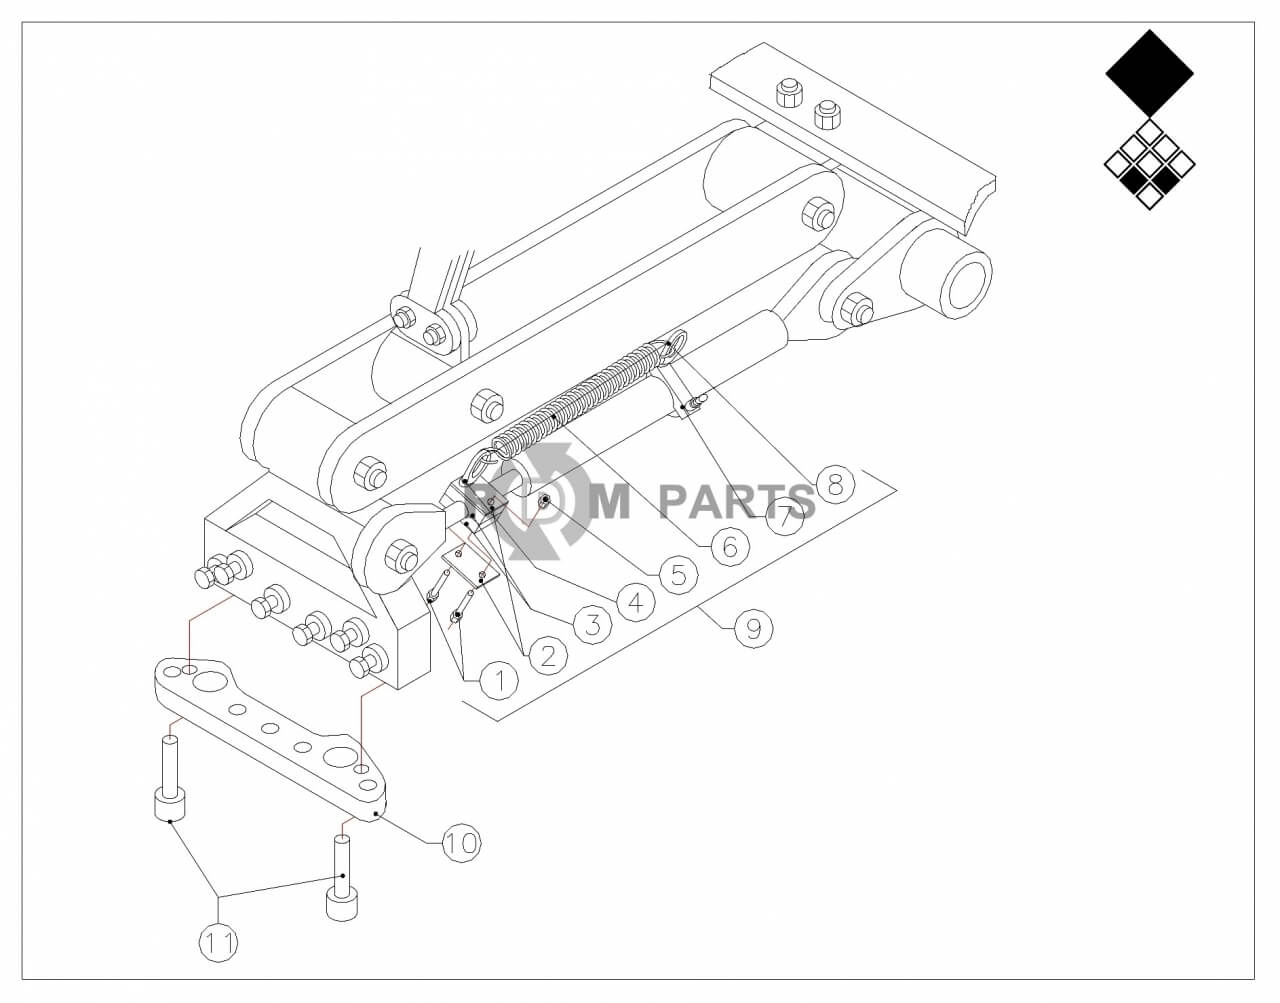 Replacement parts for VD7526 Penhouder Spanveer